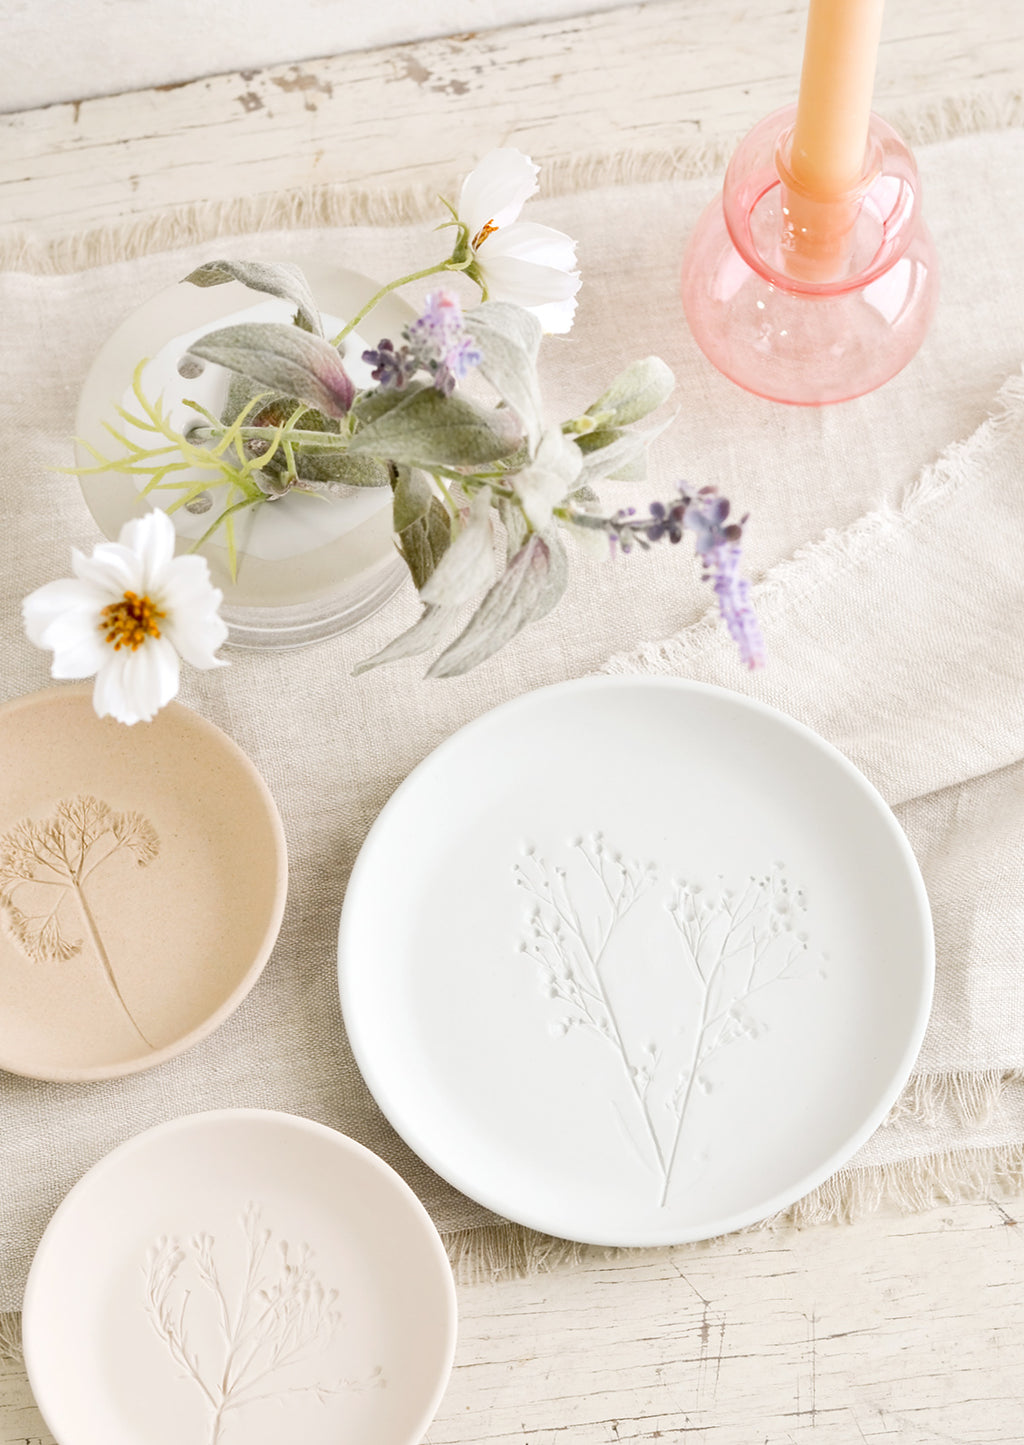 6: Porcelain plates on a table.